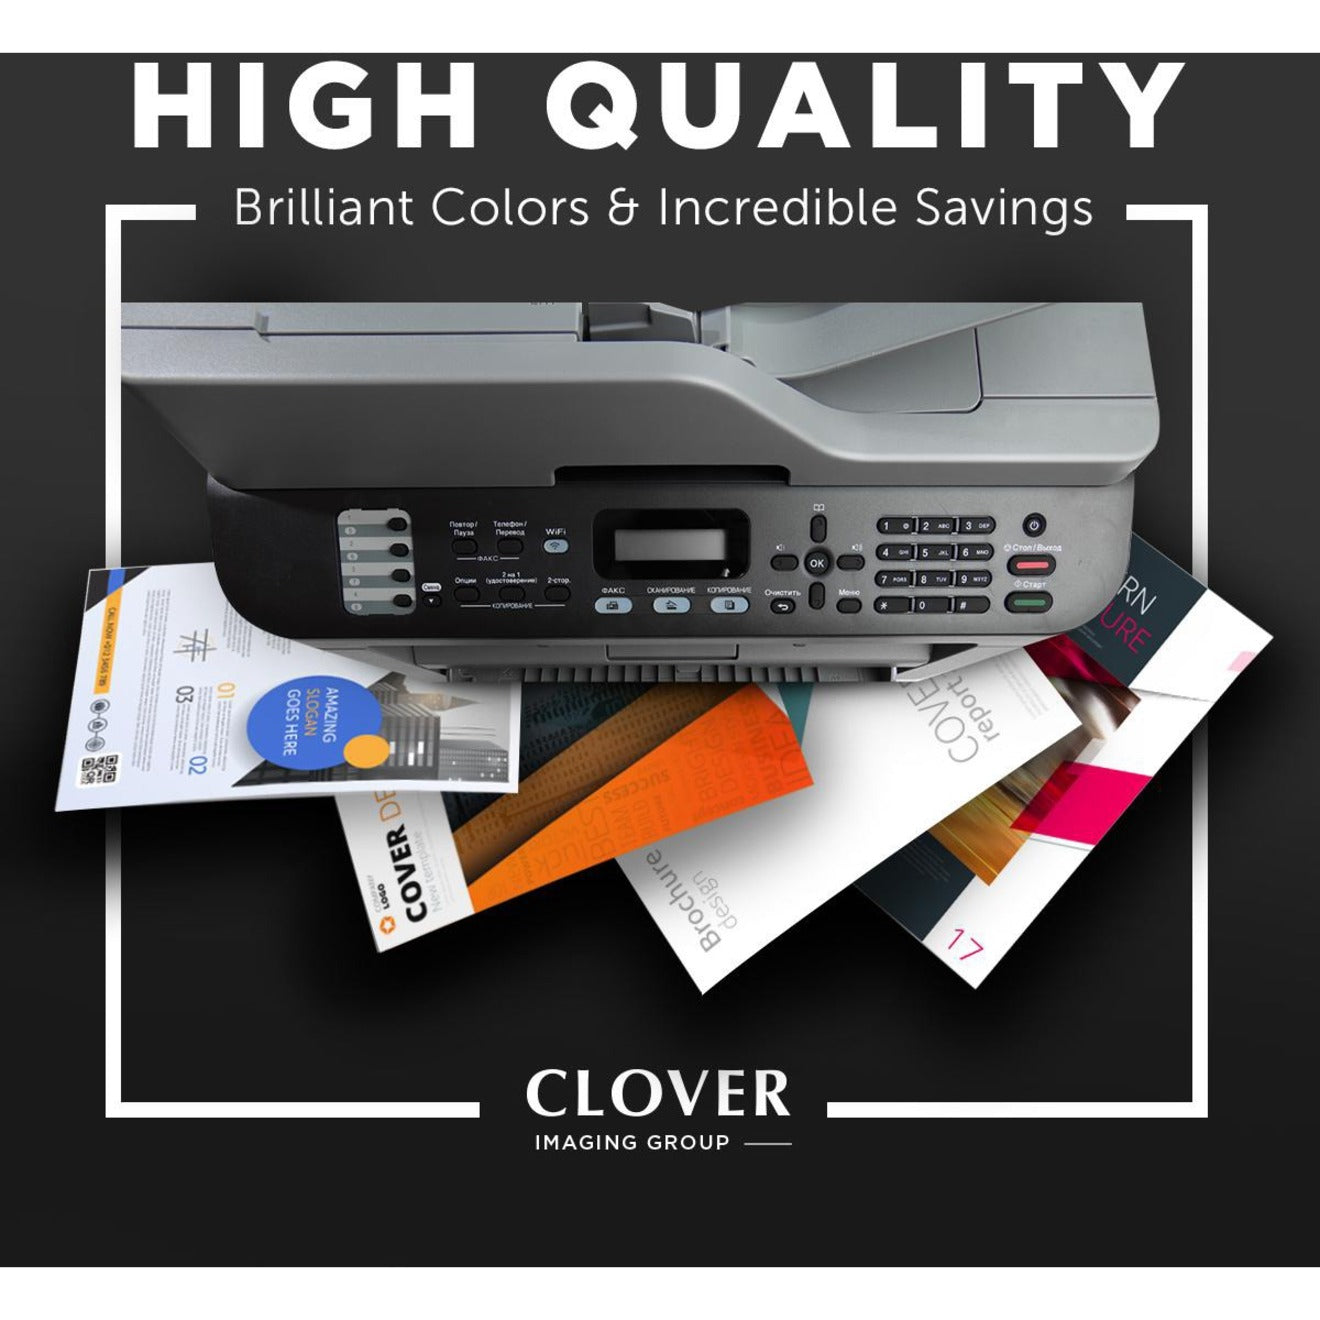 Clover Technologies Remanufactured Laser Toner Cartridge - Alternative for HP 130A (CF351A) - Cyan Pack